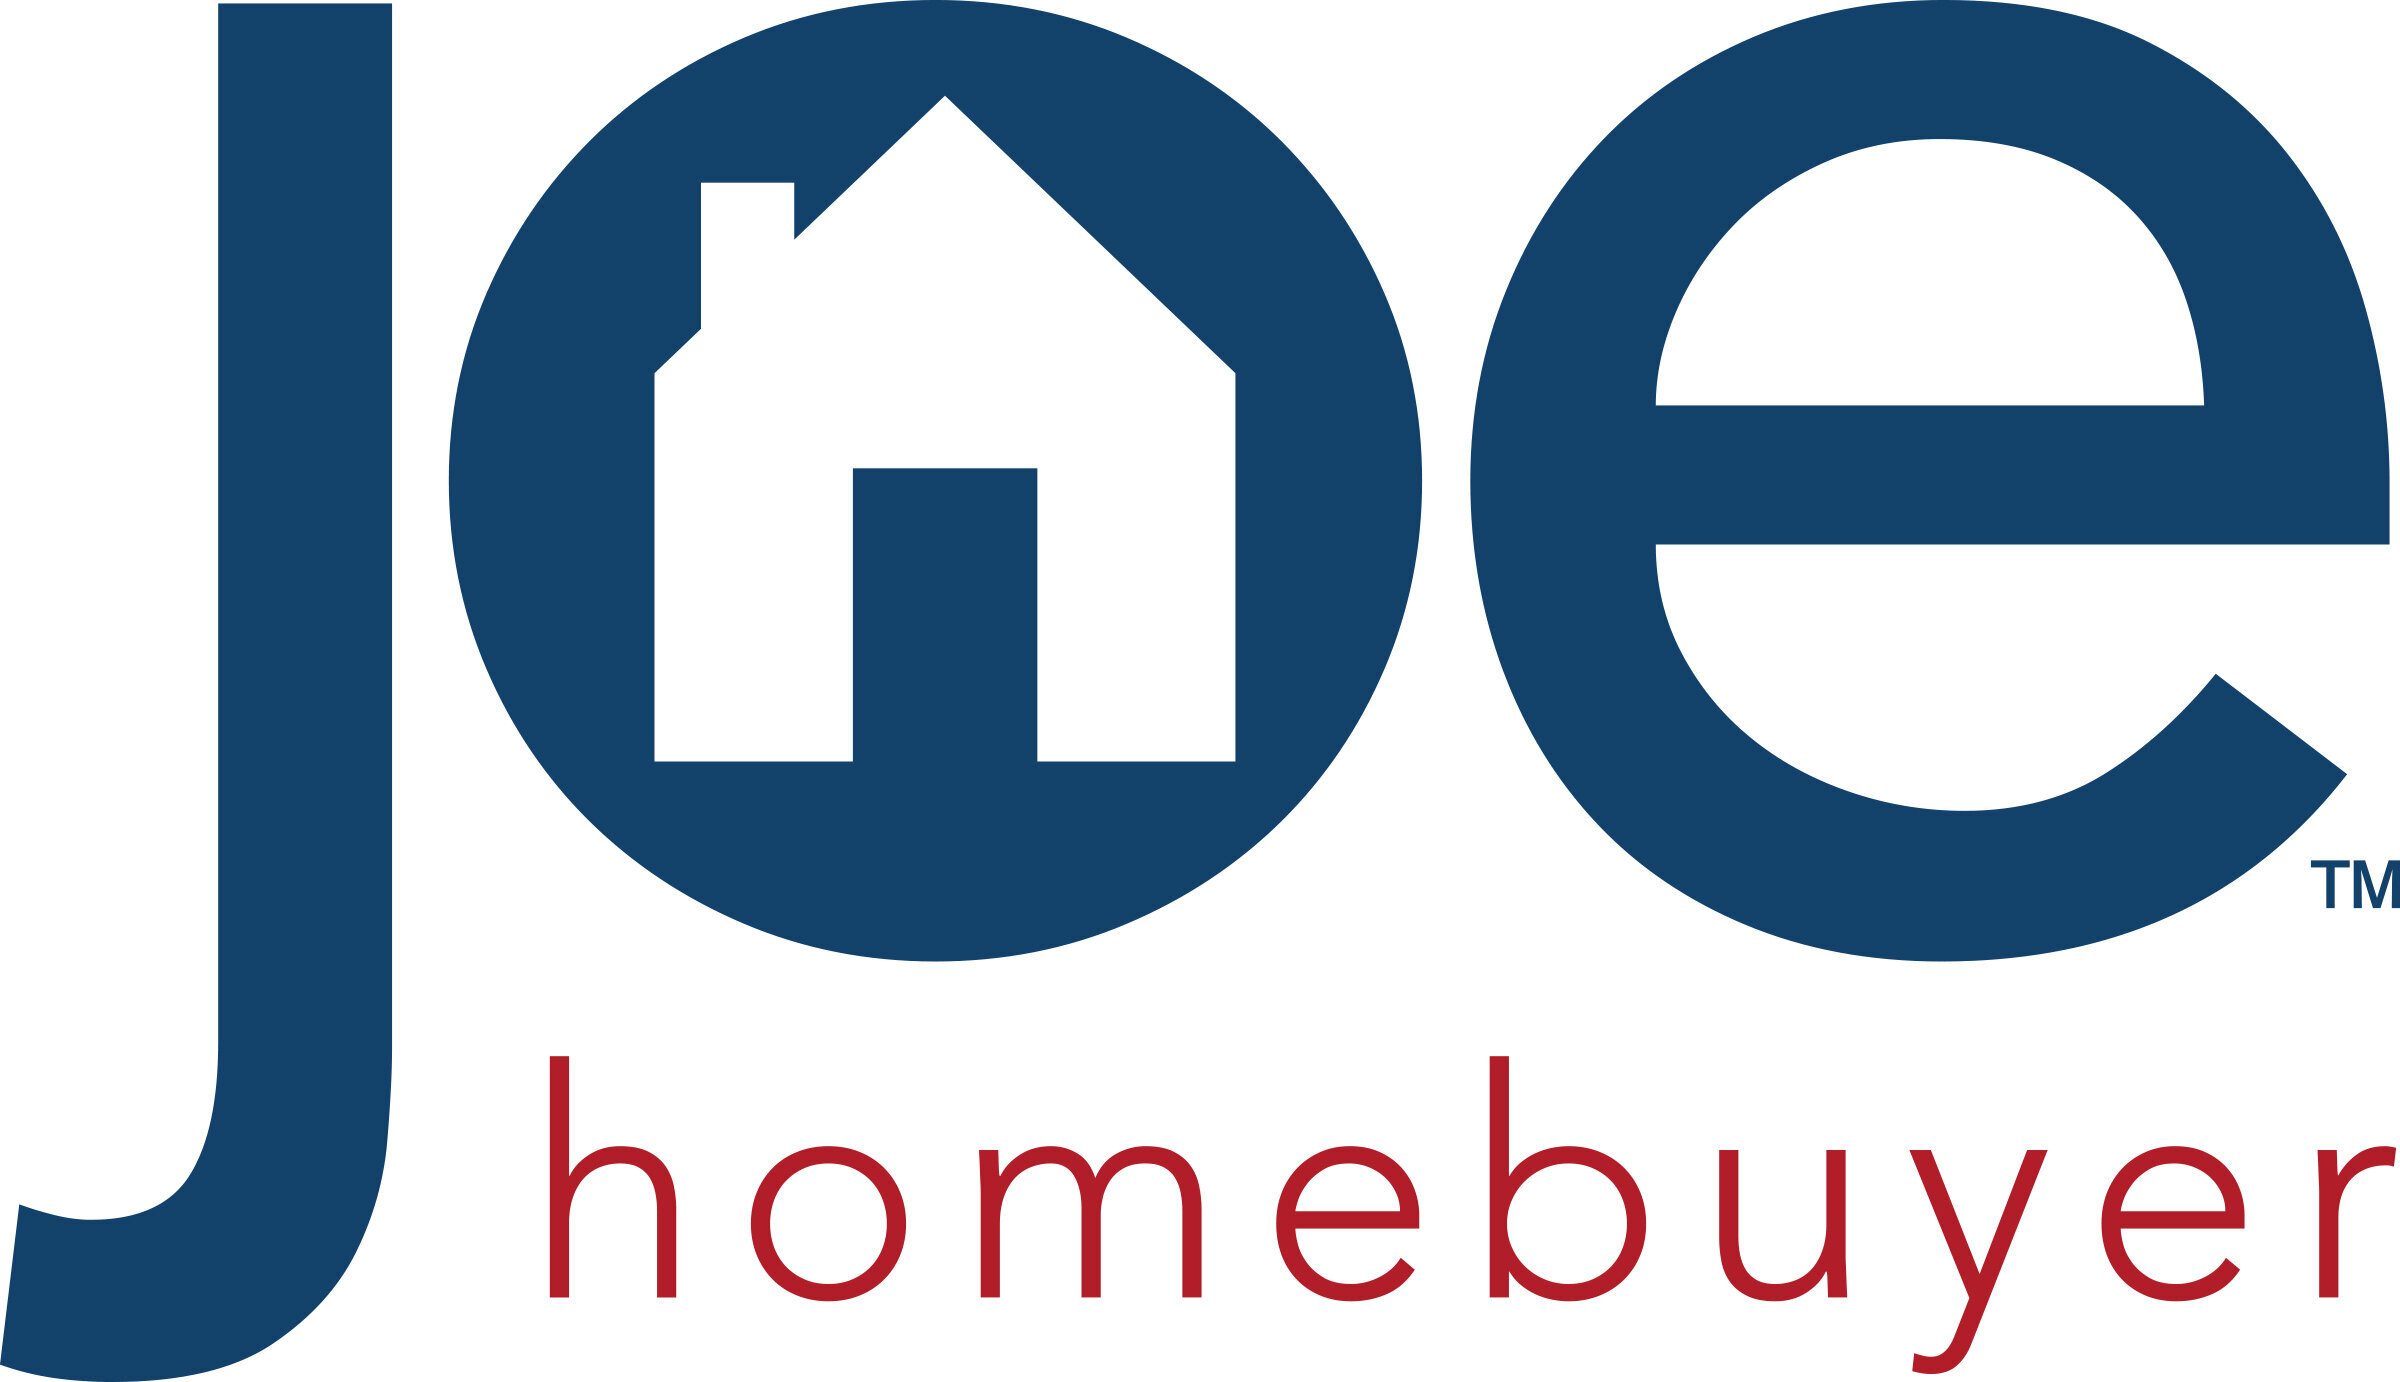 Joe Homebuyer of Seattle logo